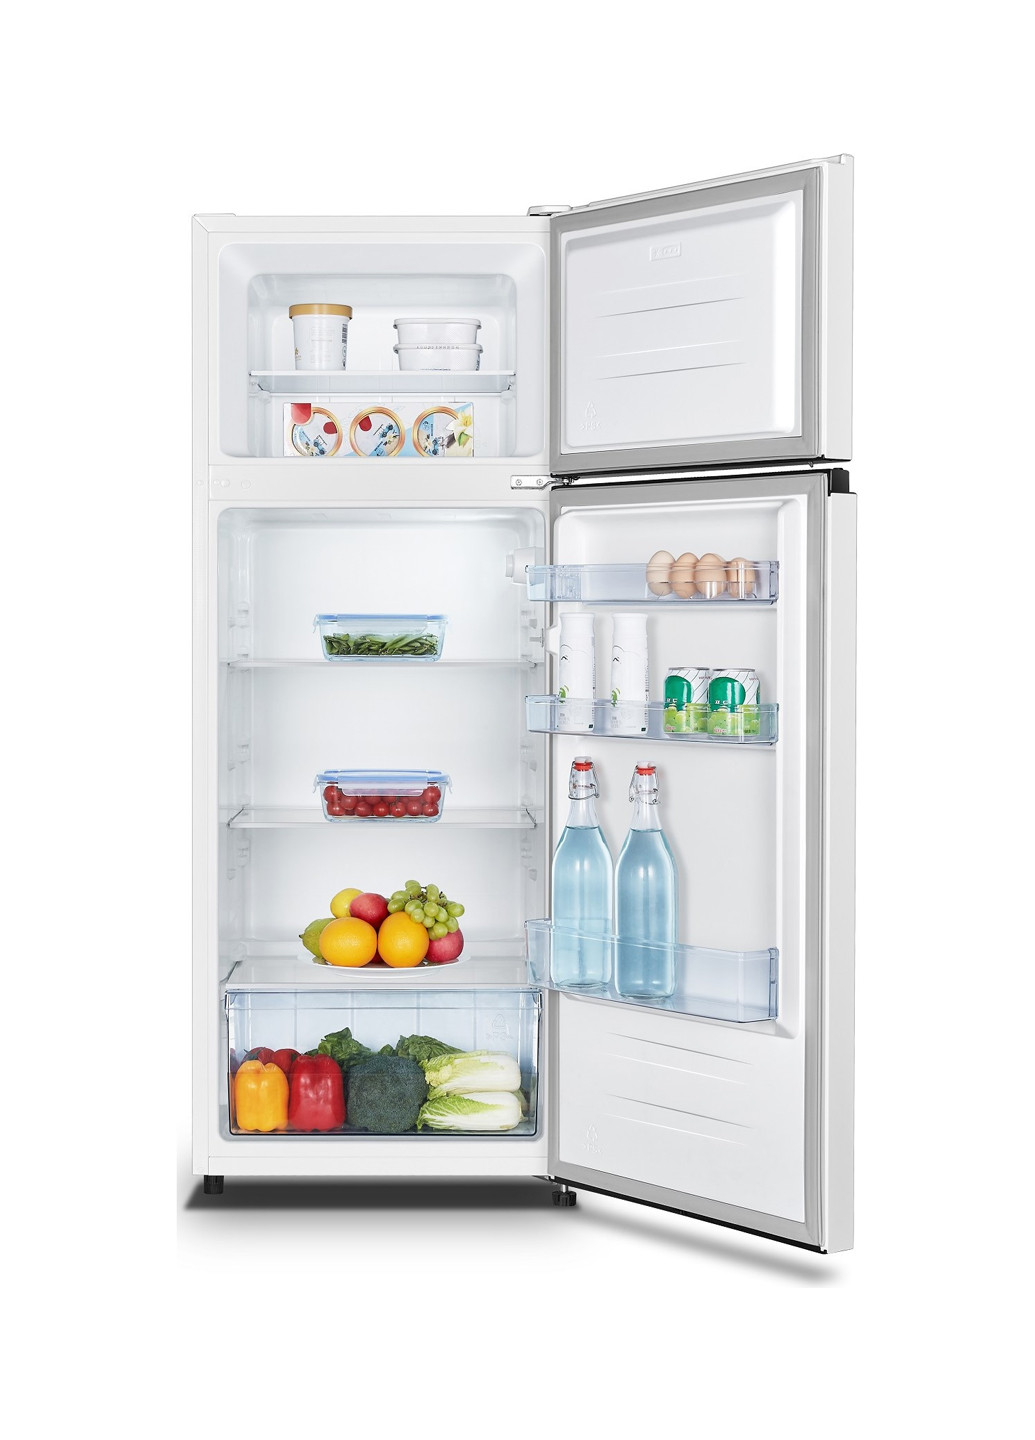 Холодильник RD-27DR4SLA / CPA1-001 Hisense rd-27dr4sla/cpa1-001 (142685250)